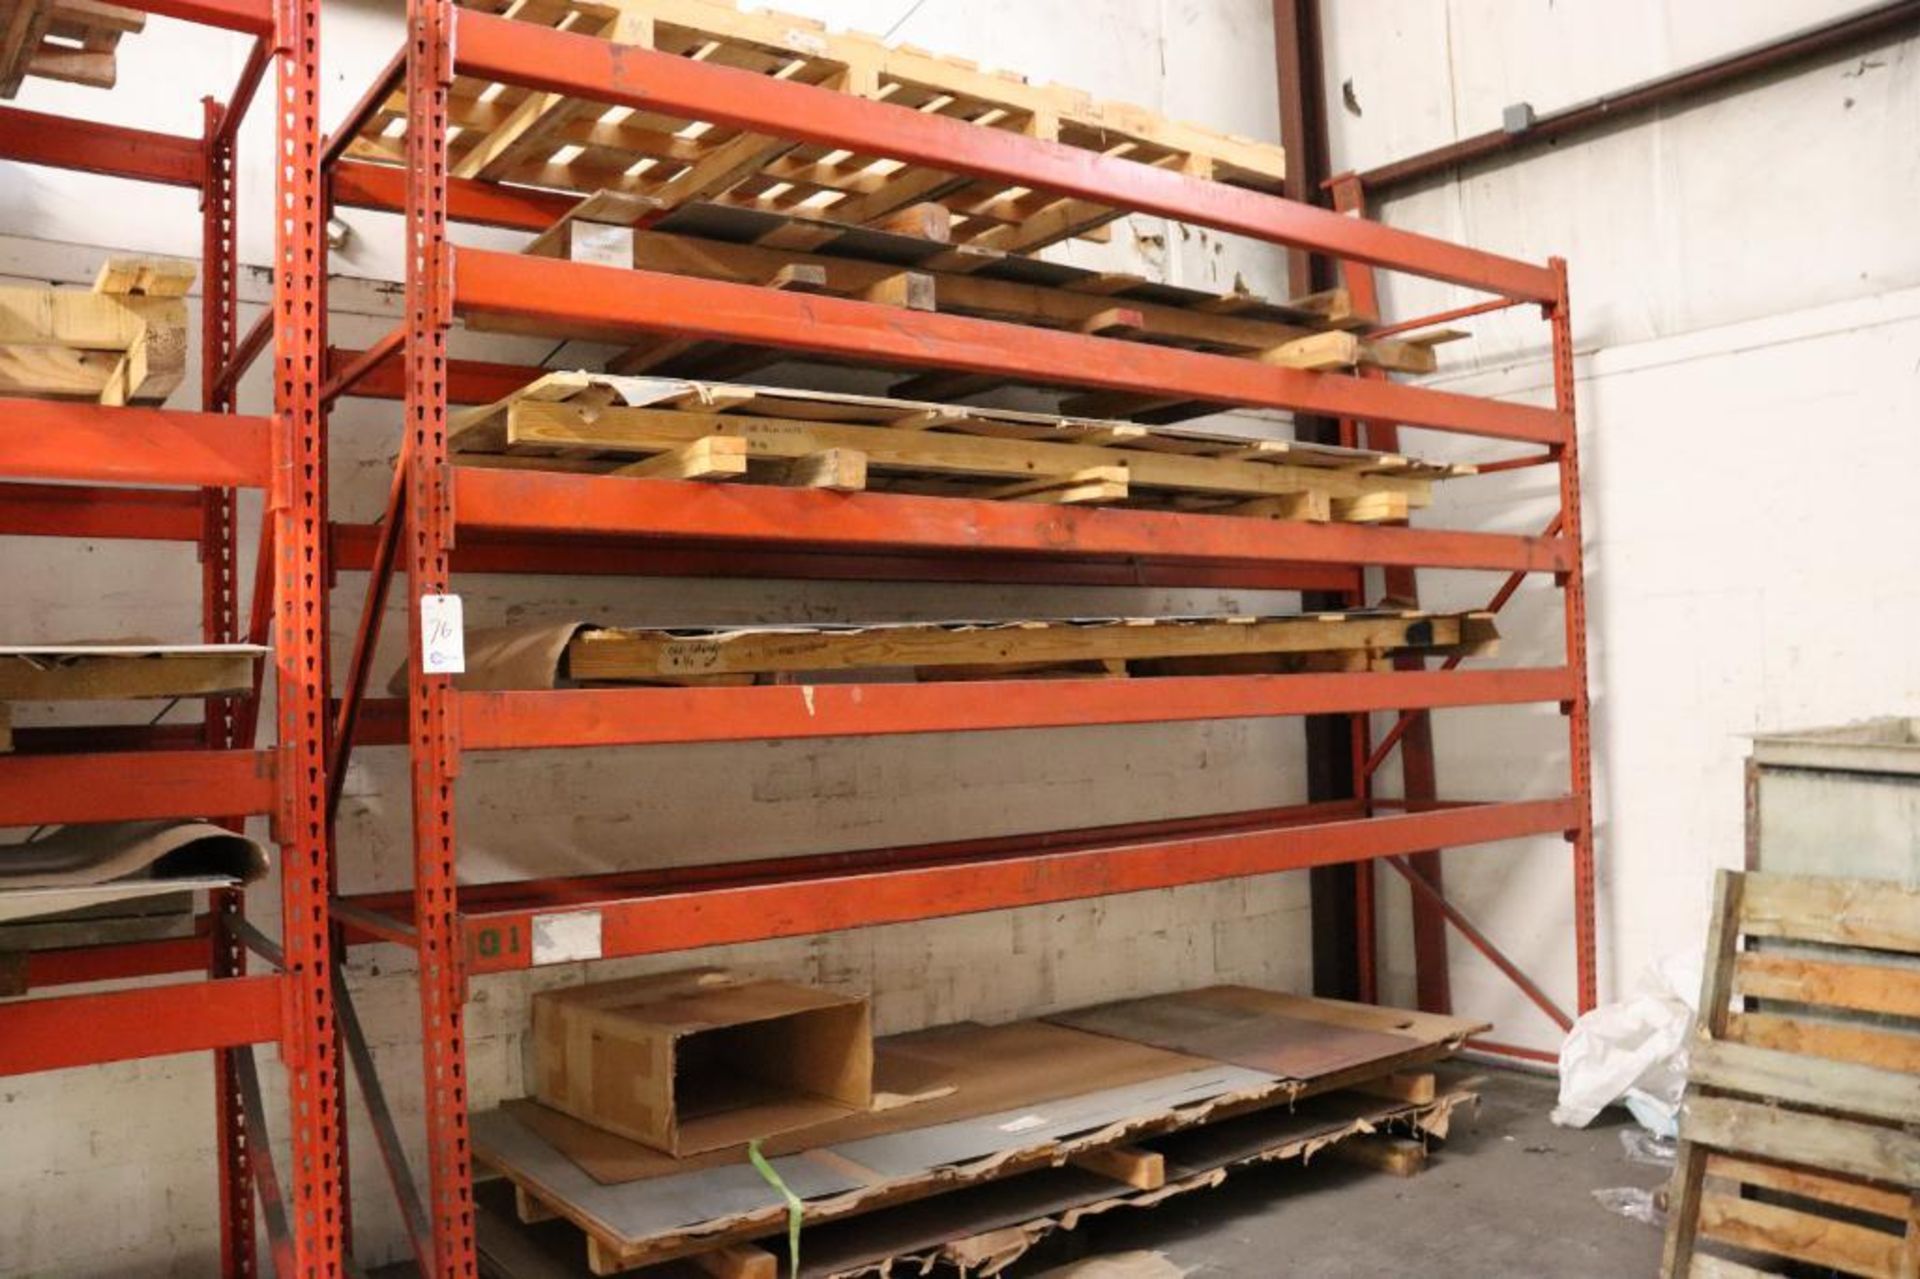 Pallet rack section w/ sheet metal